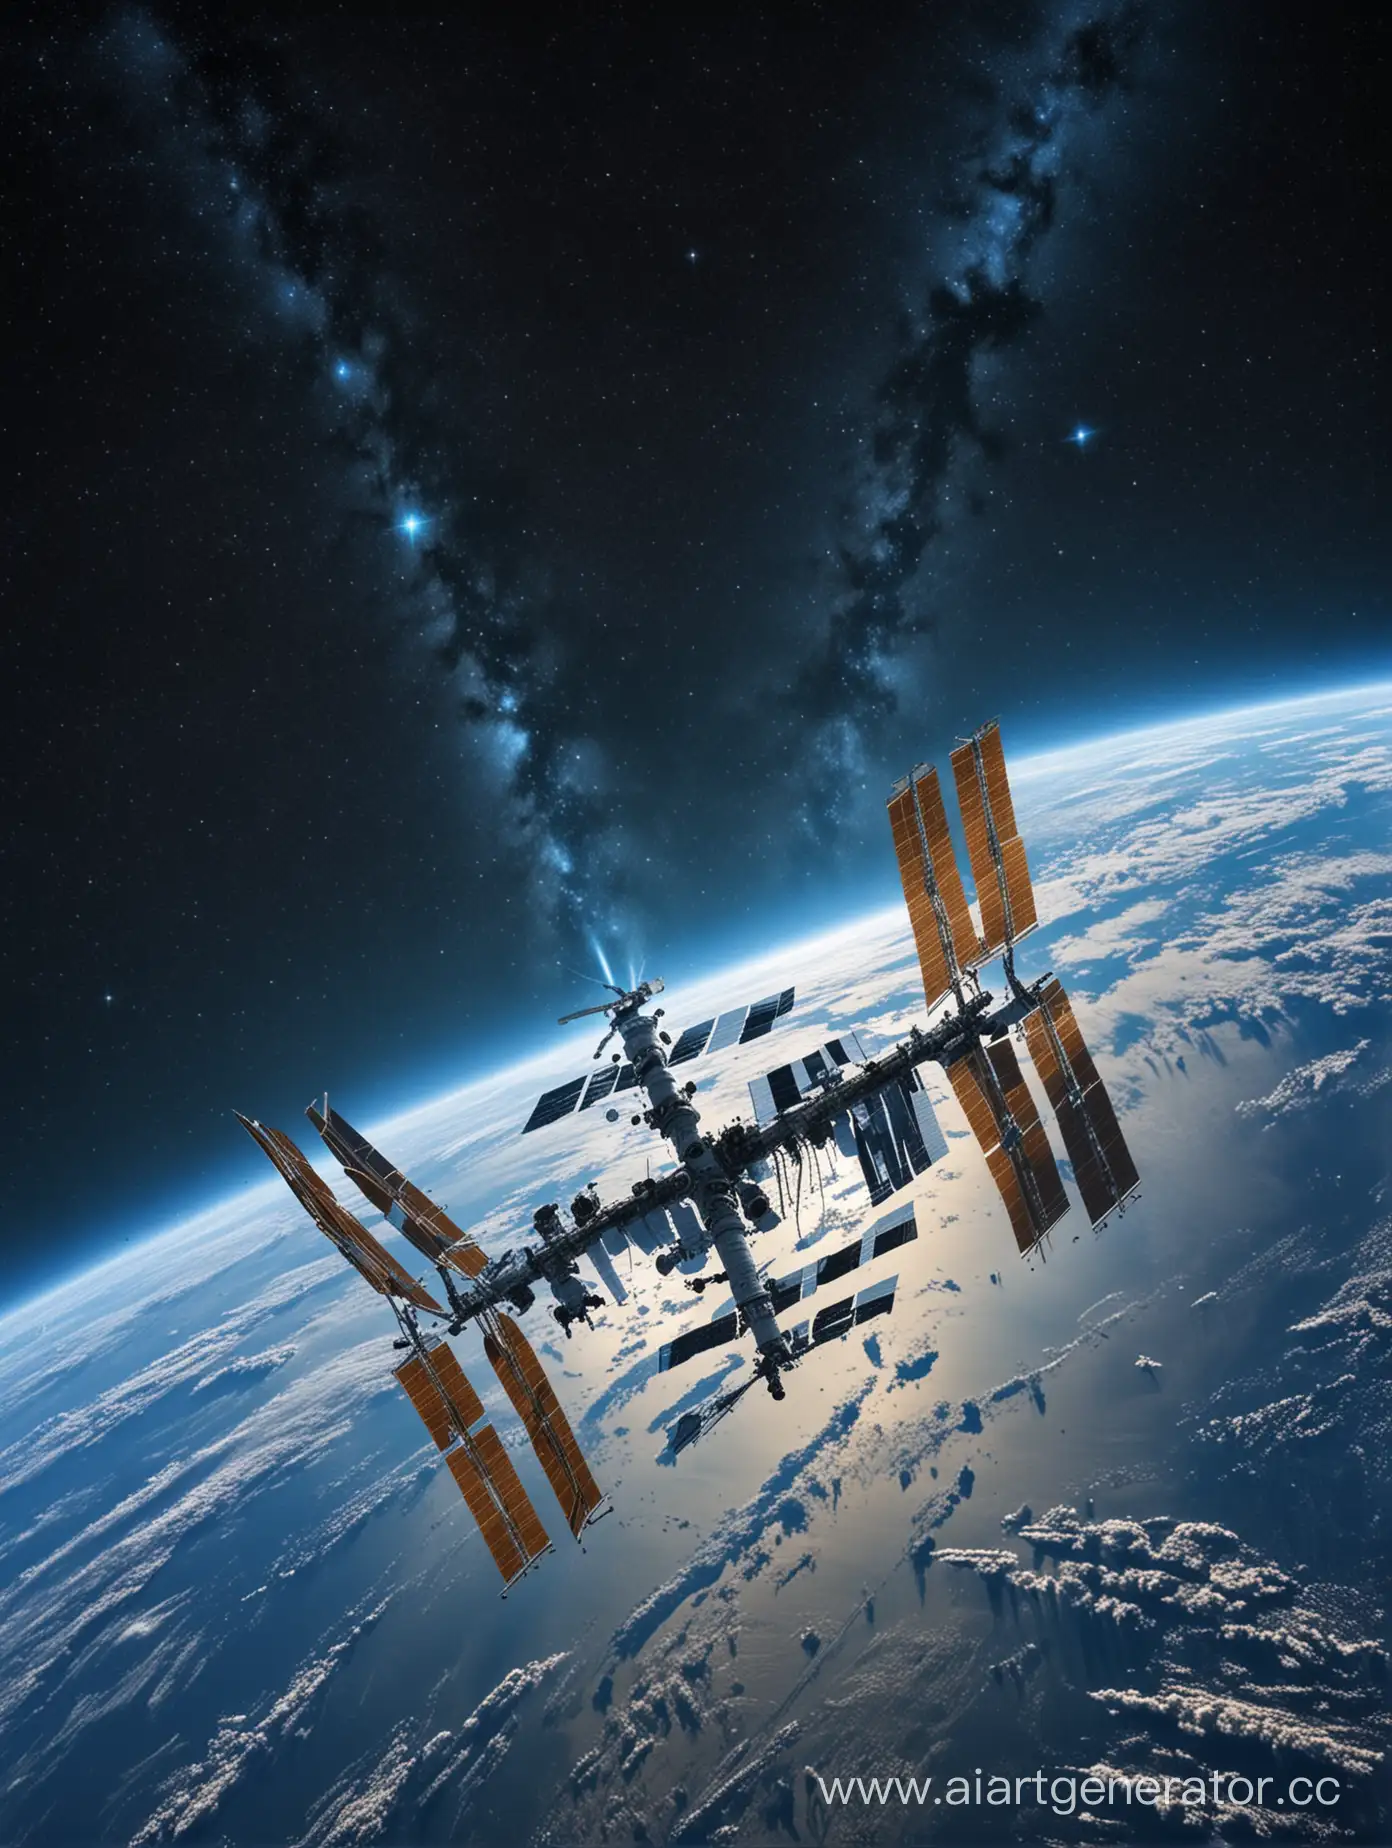 International-Space-Station-Emitting-Brilliant-Blue-Rays-Towards-Earth